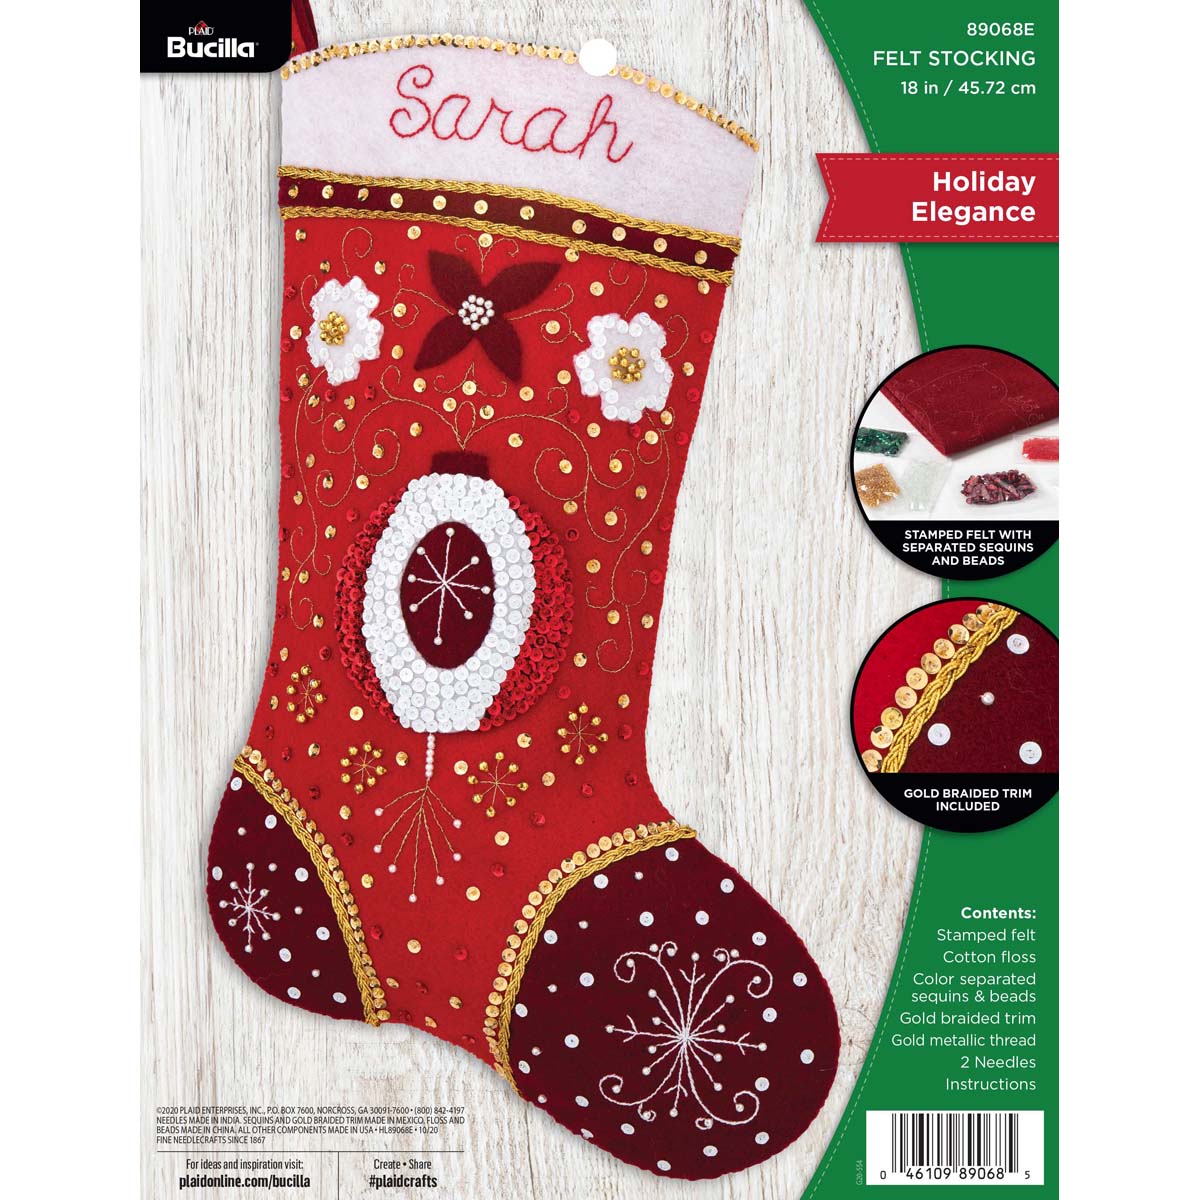 Shop Plaid Bucilla ® Seasonal - Felt - Stocking Kits - Holiday